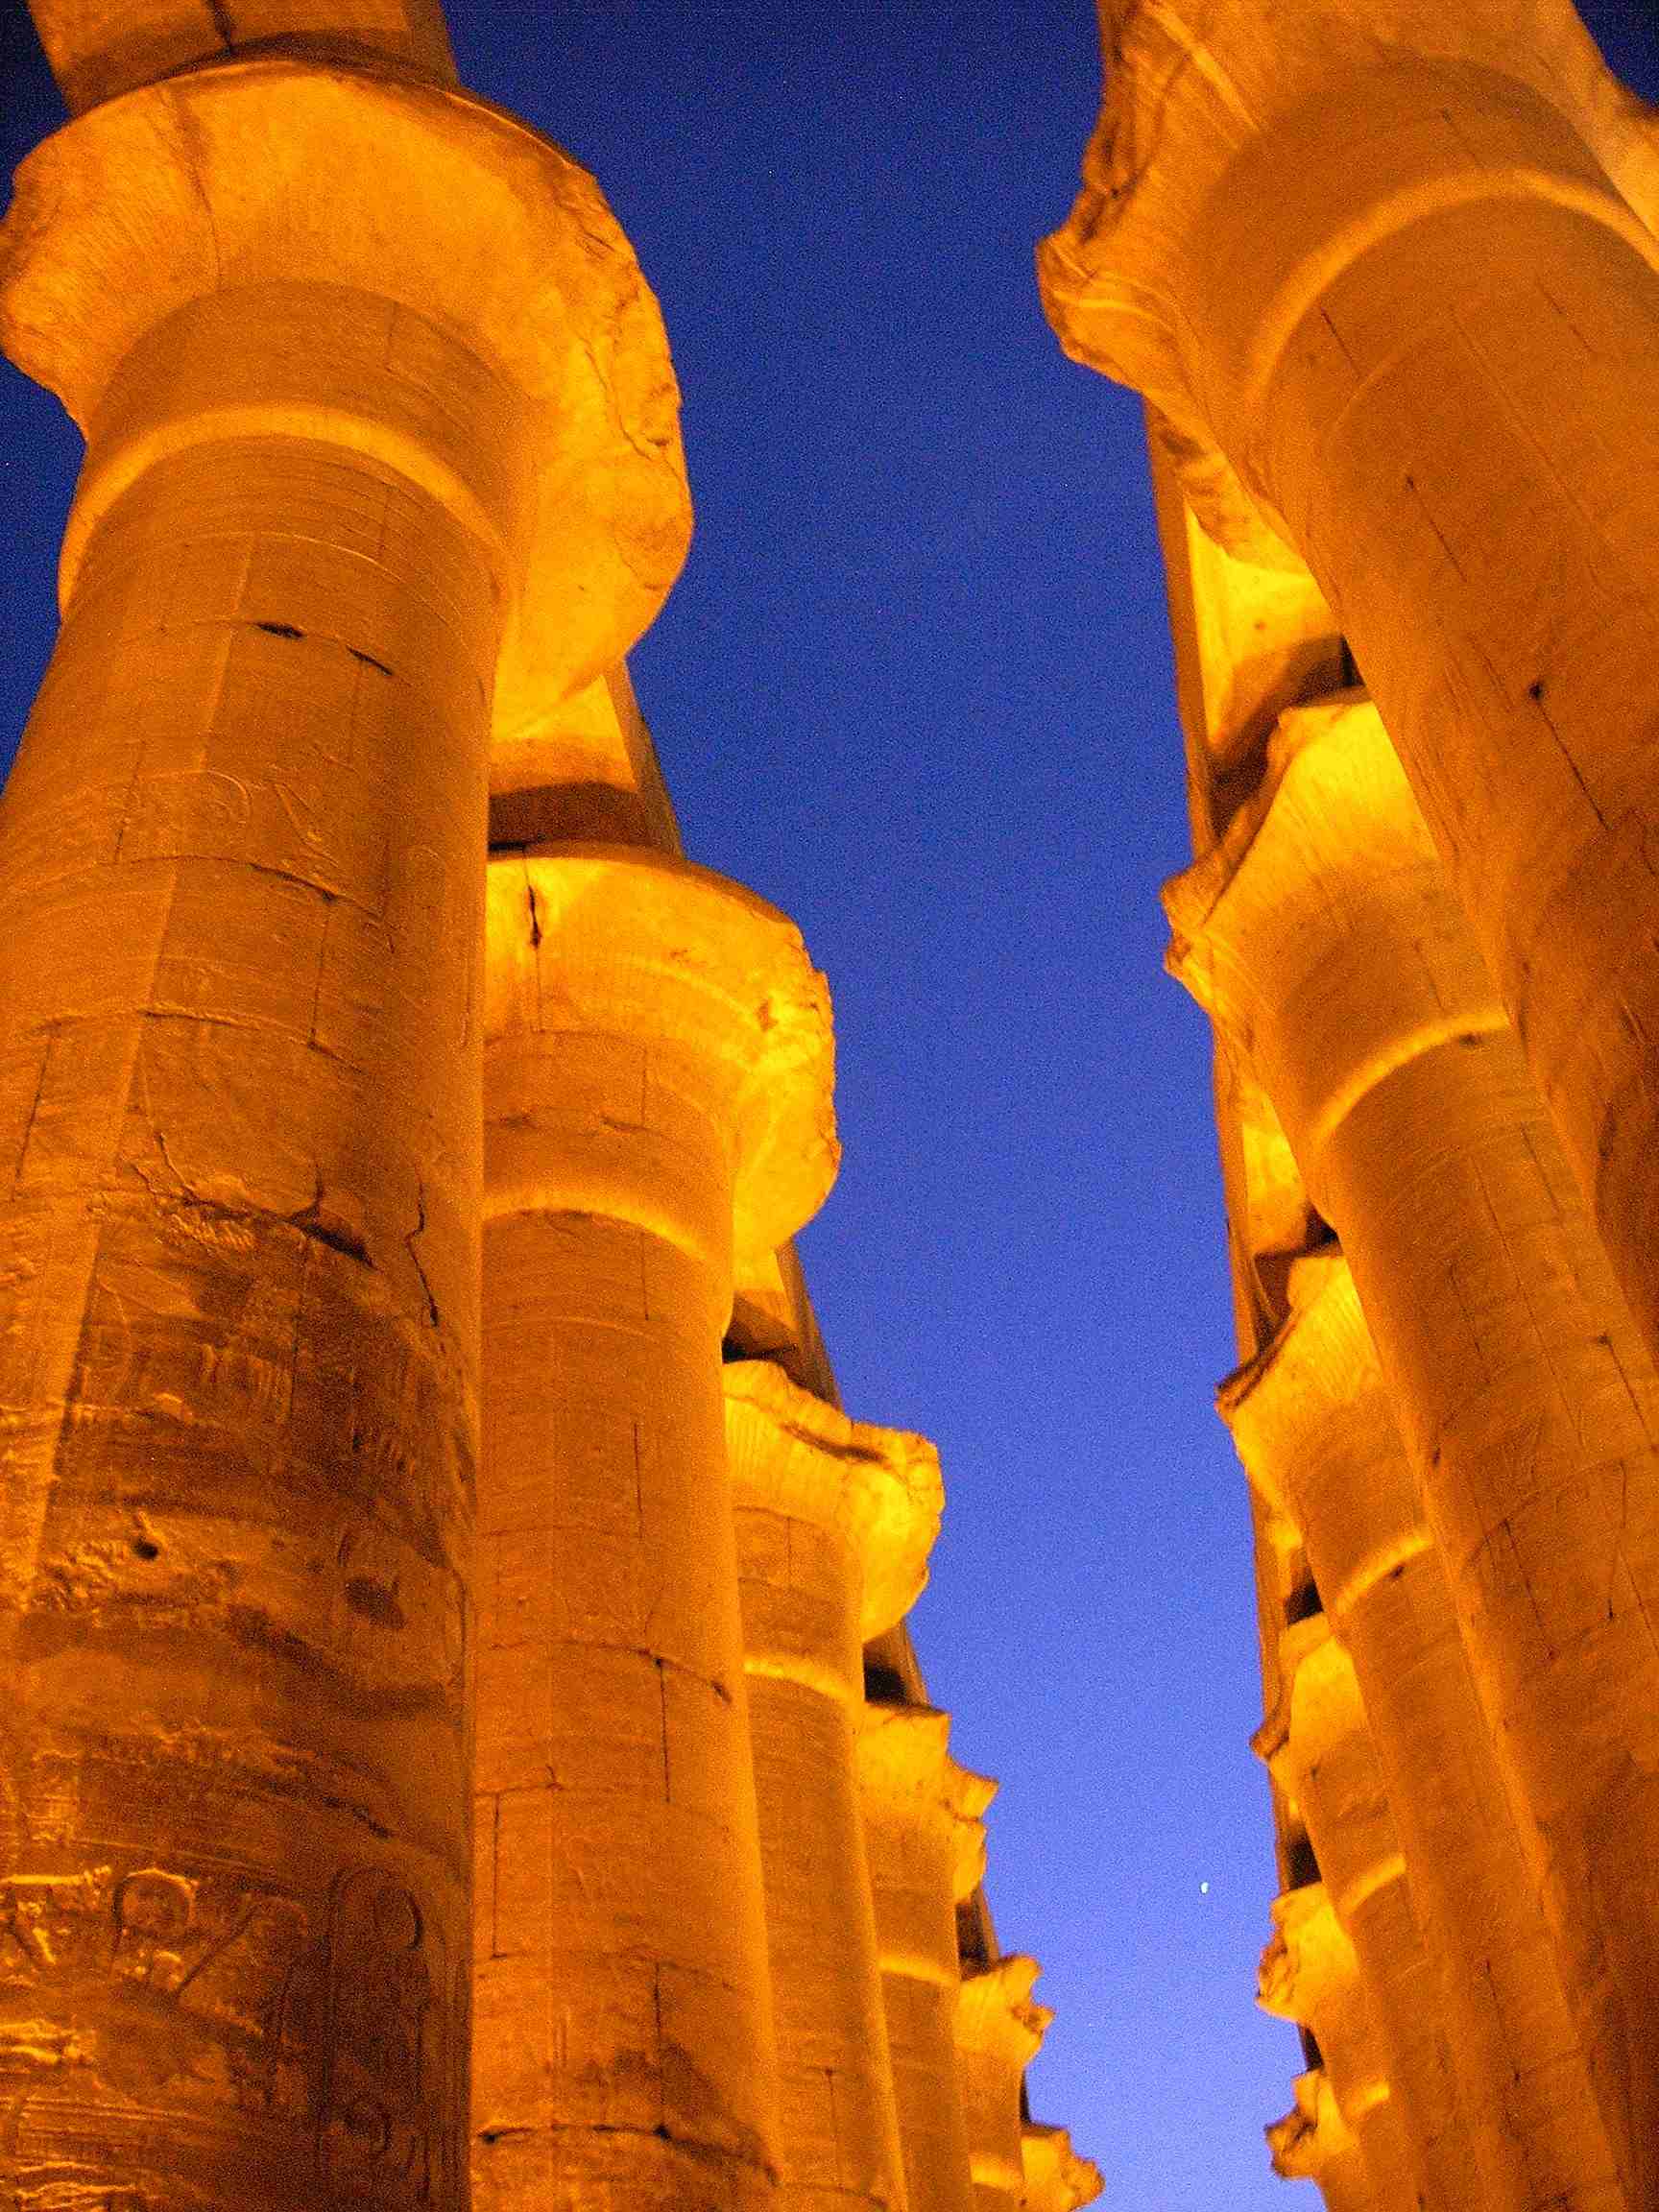 columns lit